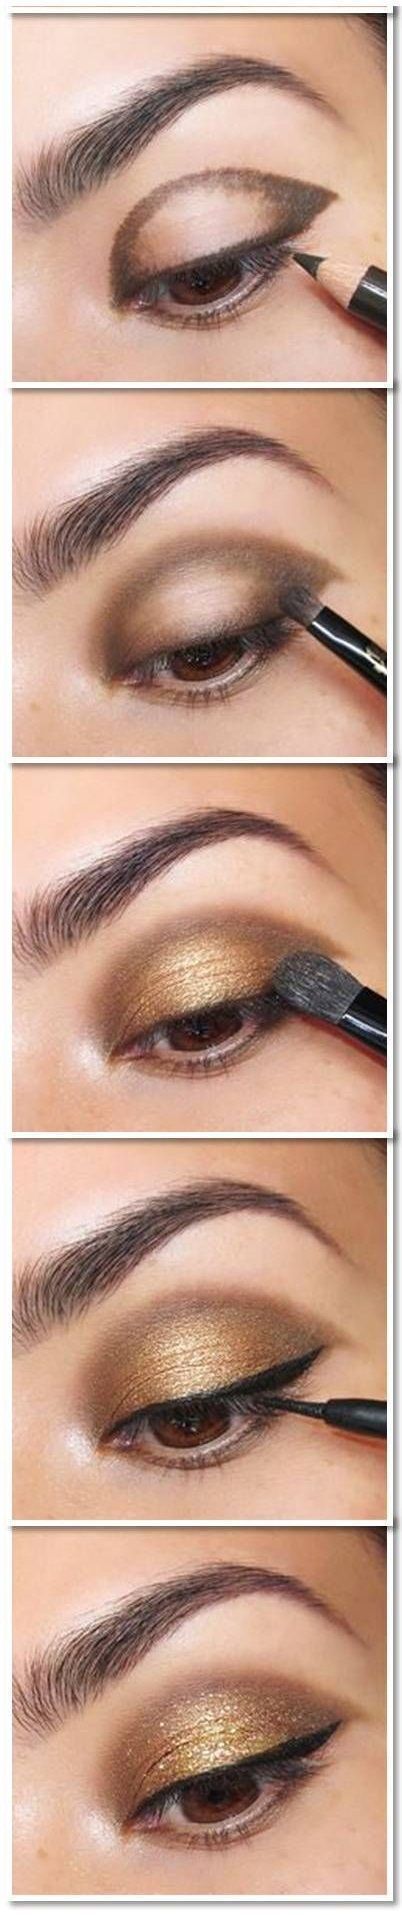 makeup-tutorial-for-brown-eyes-and-tan-skin-68_18 Make-up tutorial voor bruine ogen en bruine huid